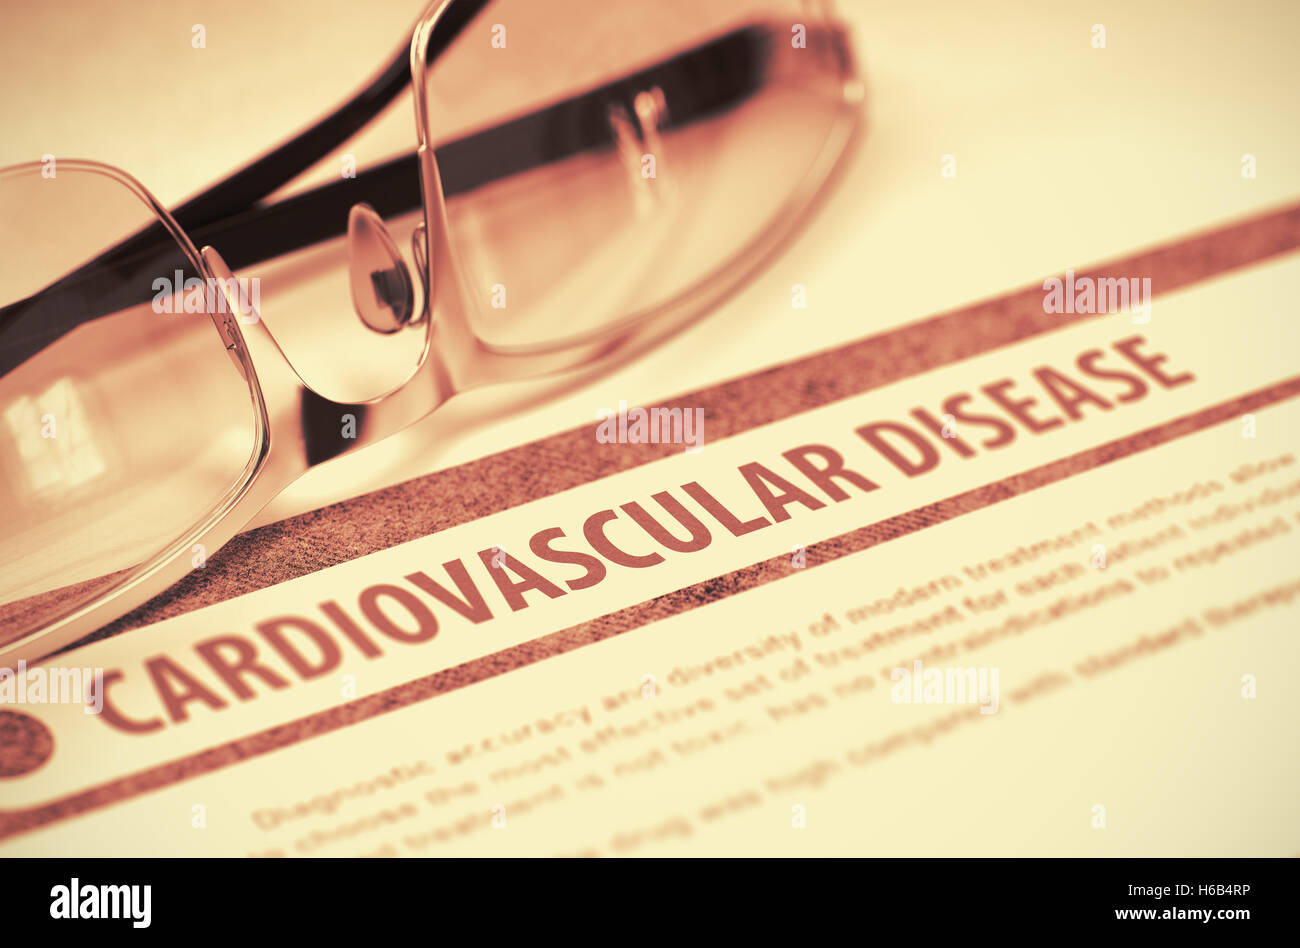 Cardiovascular Disease. Medicine. 3D Illustration. Stock Photo